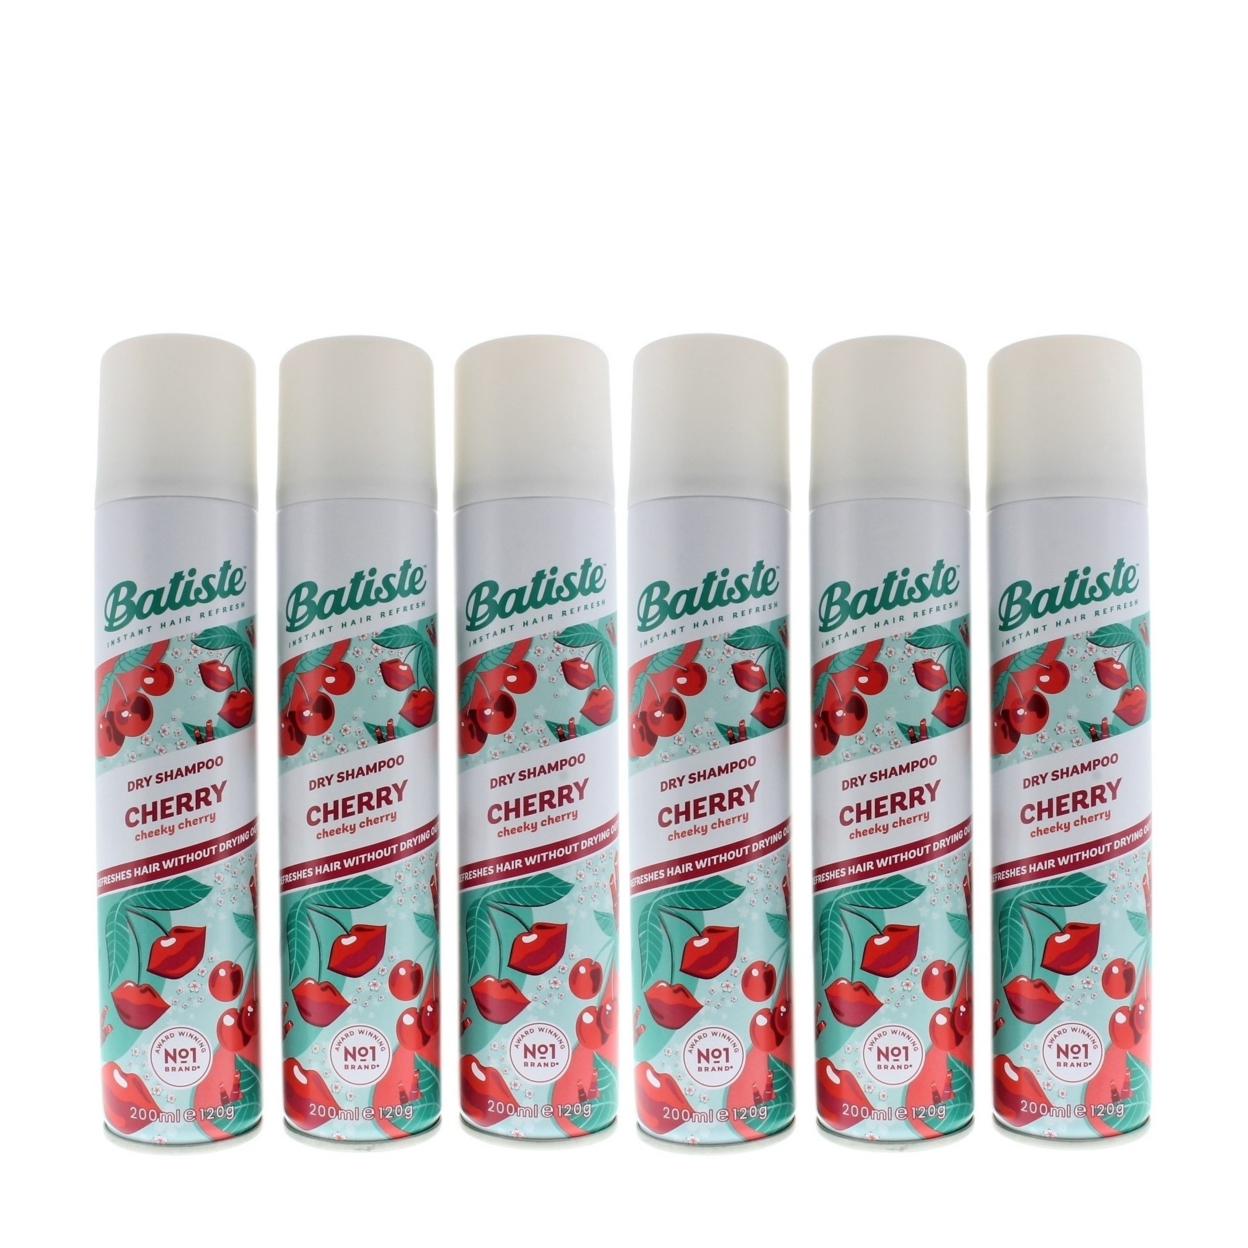 Batiste Instant Hair Refresh Dry Shampoo Cherry Cheeky Cherry 200ml/120g (6 PACK)